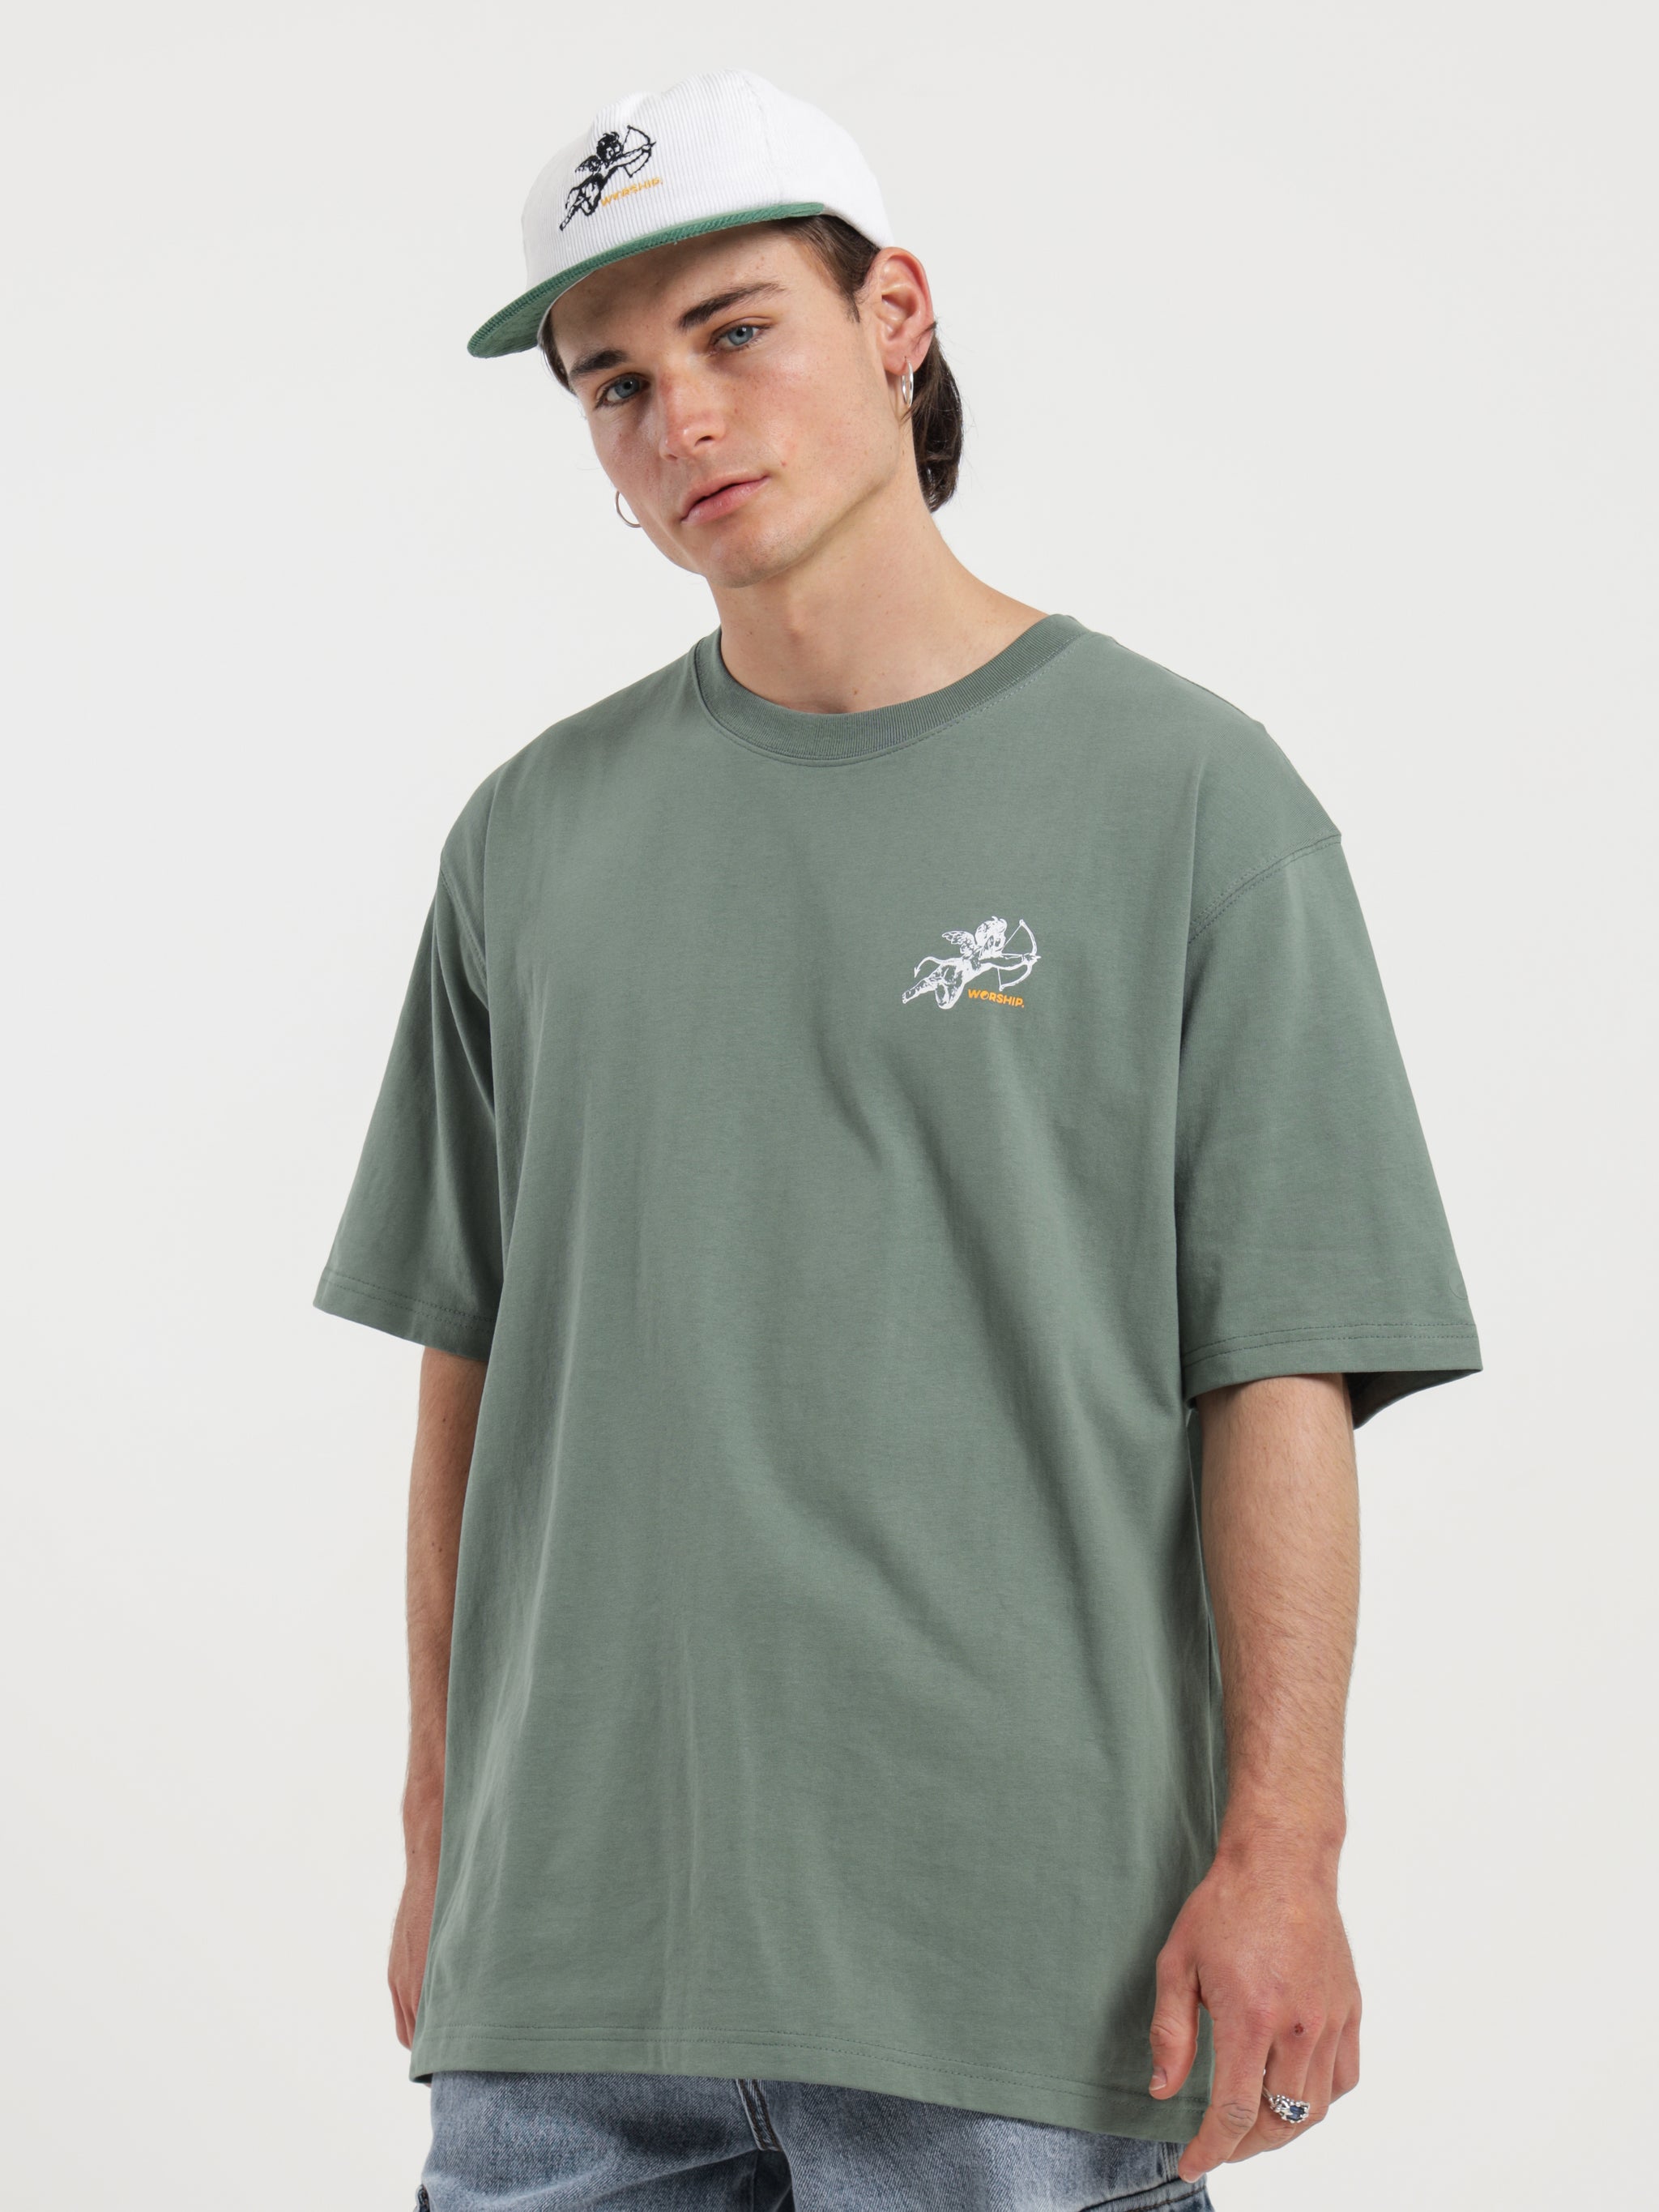 Cherub T-Shirt in Green - Glue Store